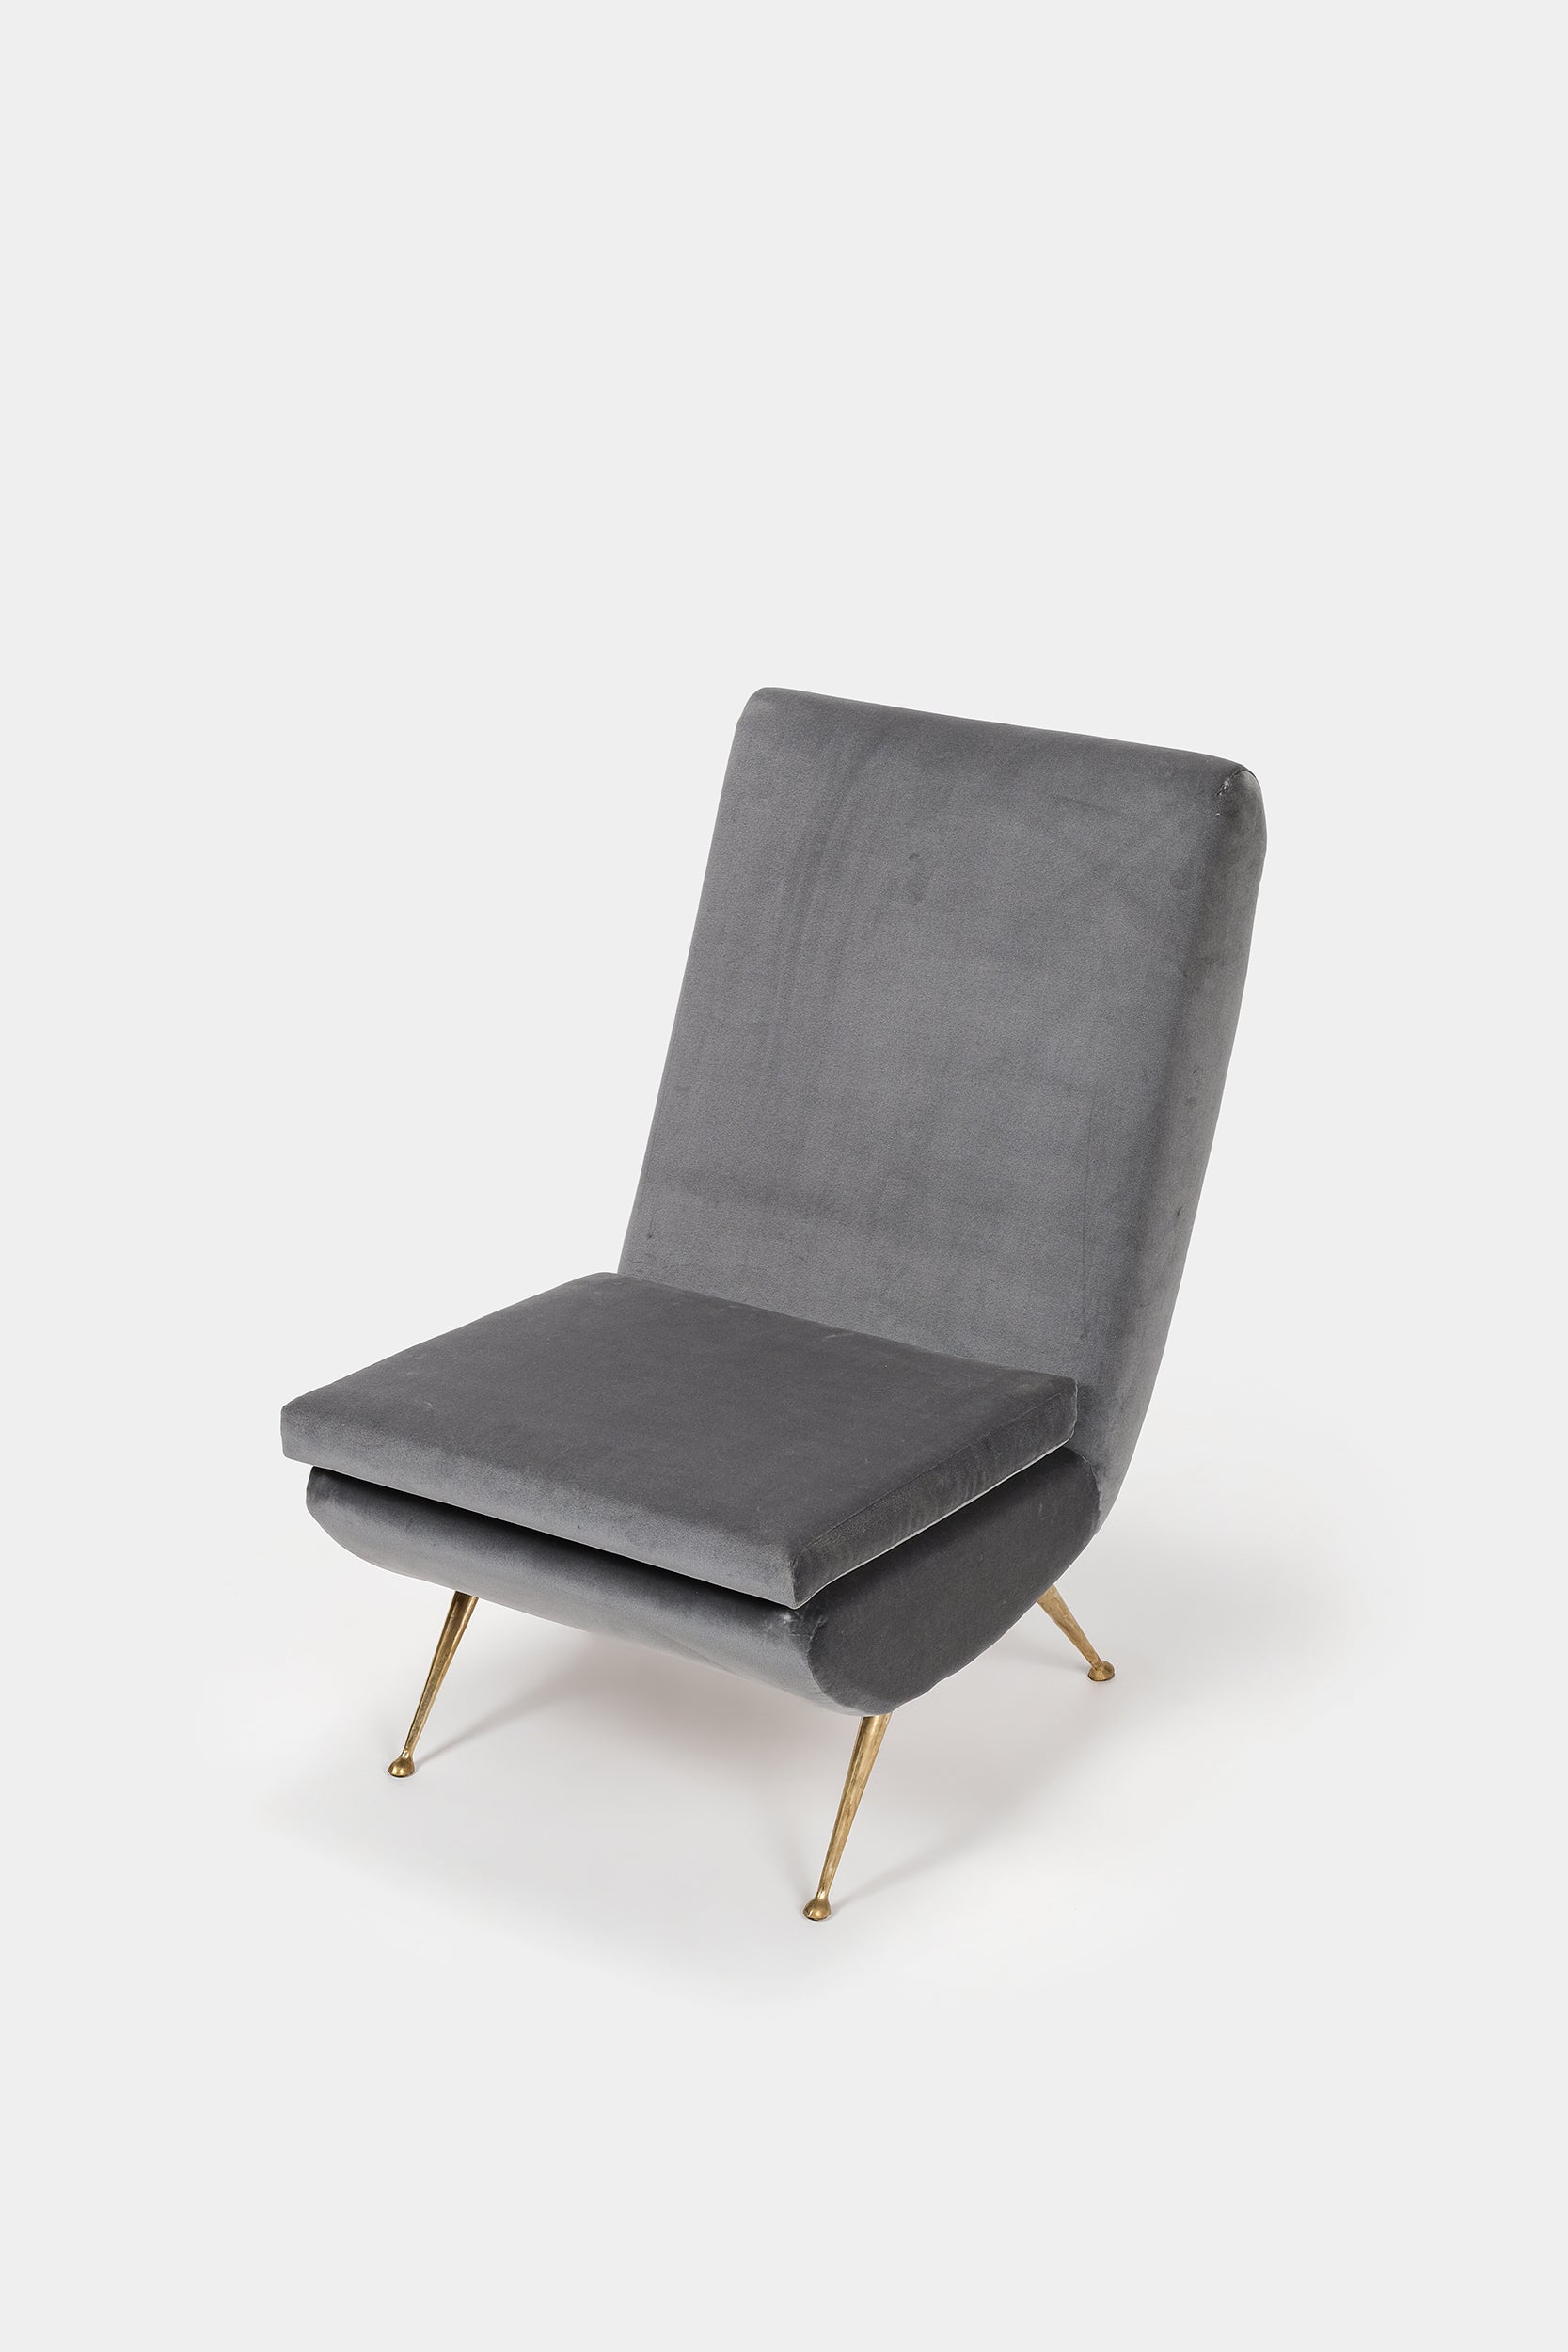 Aldo Morbelli, Easy Chair, Velours, i.S.A. Bergamo, 50s